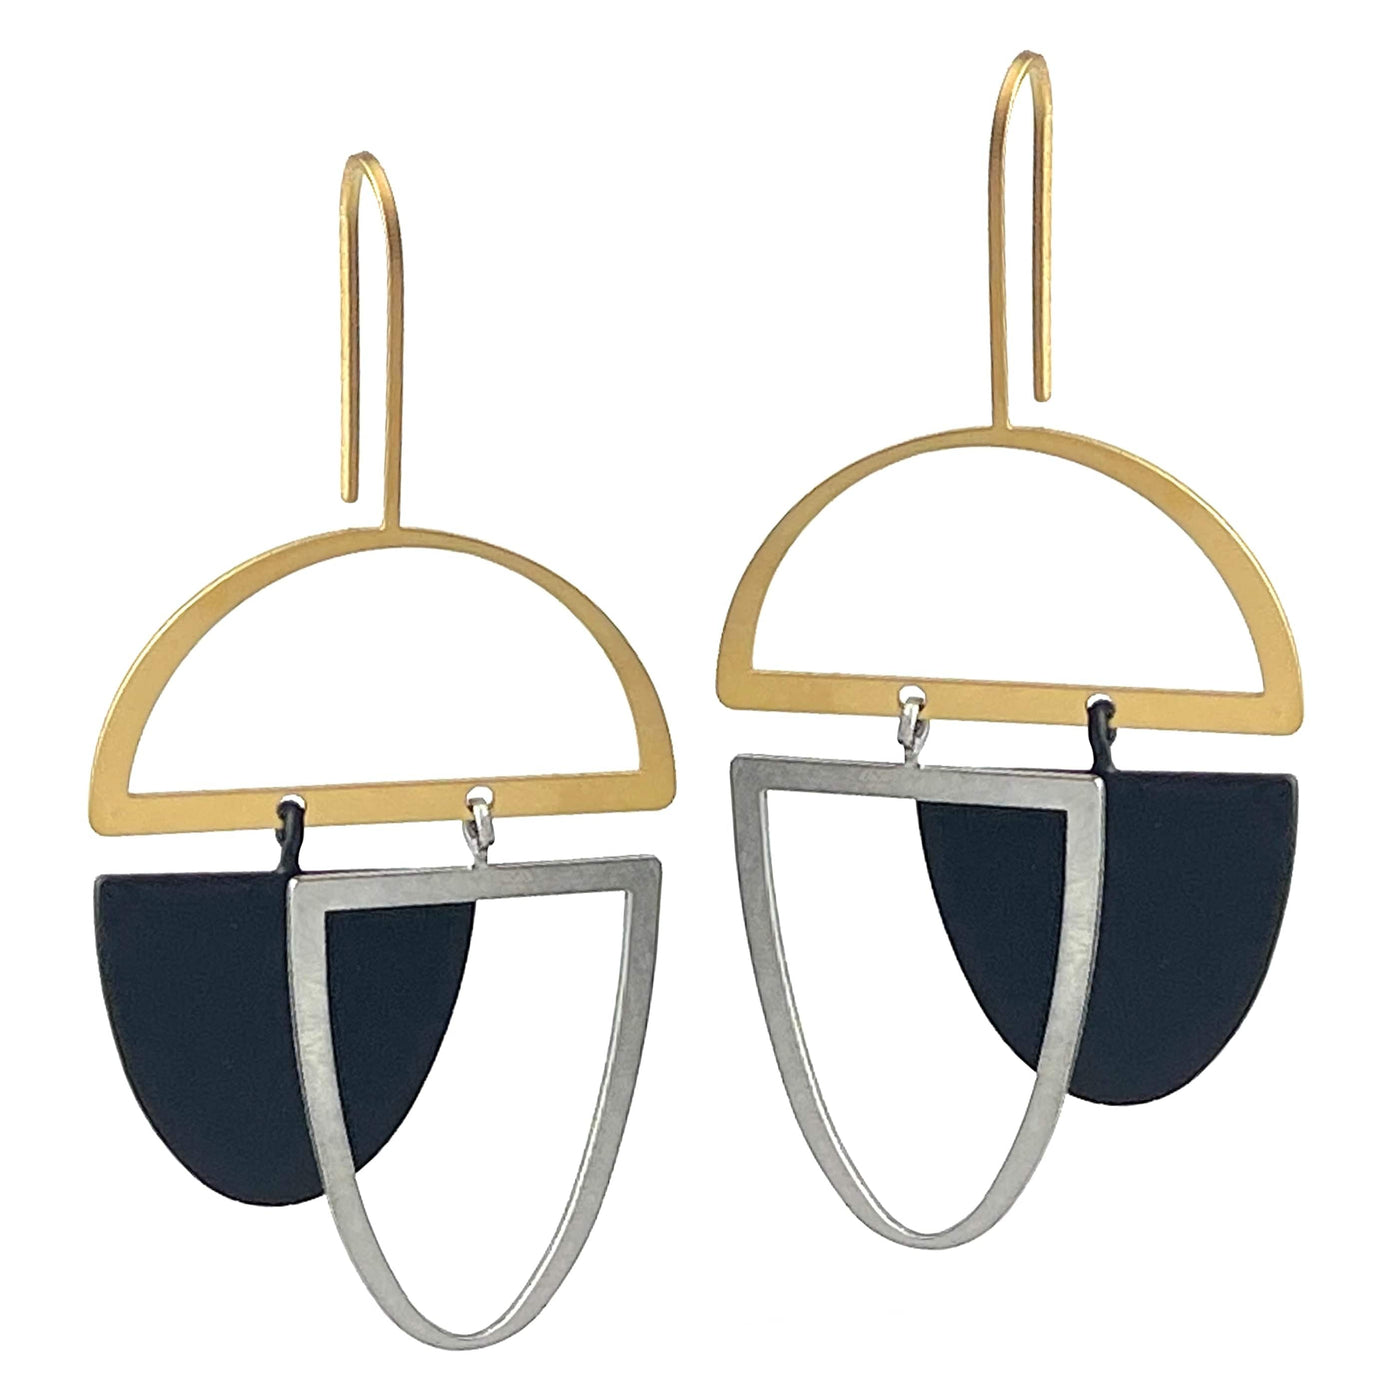 X2 Plunge Earrings - Raw/ Gold/ Black - inSync design